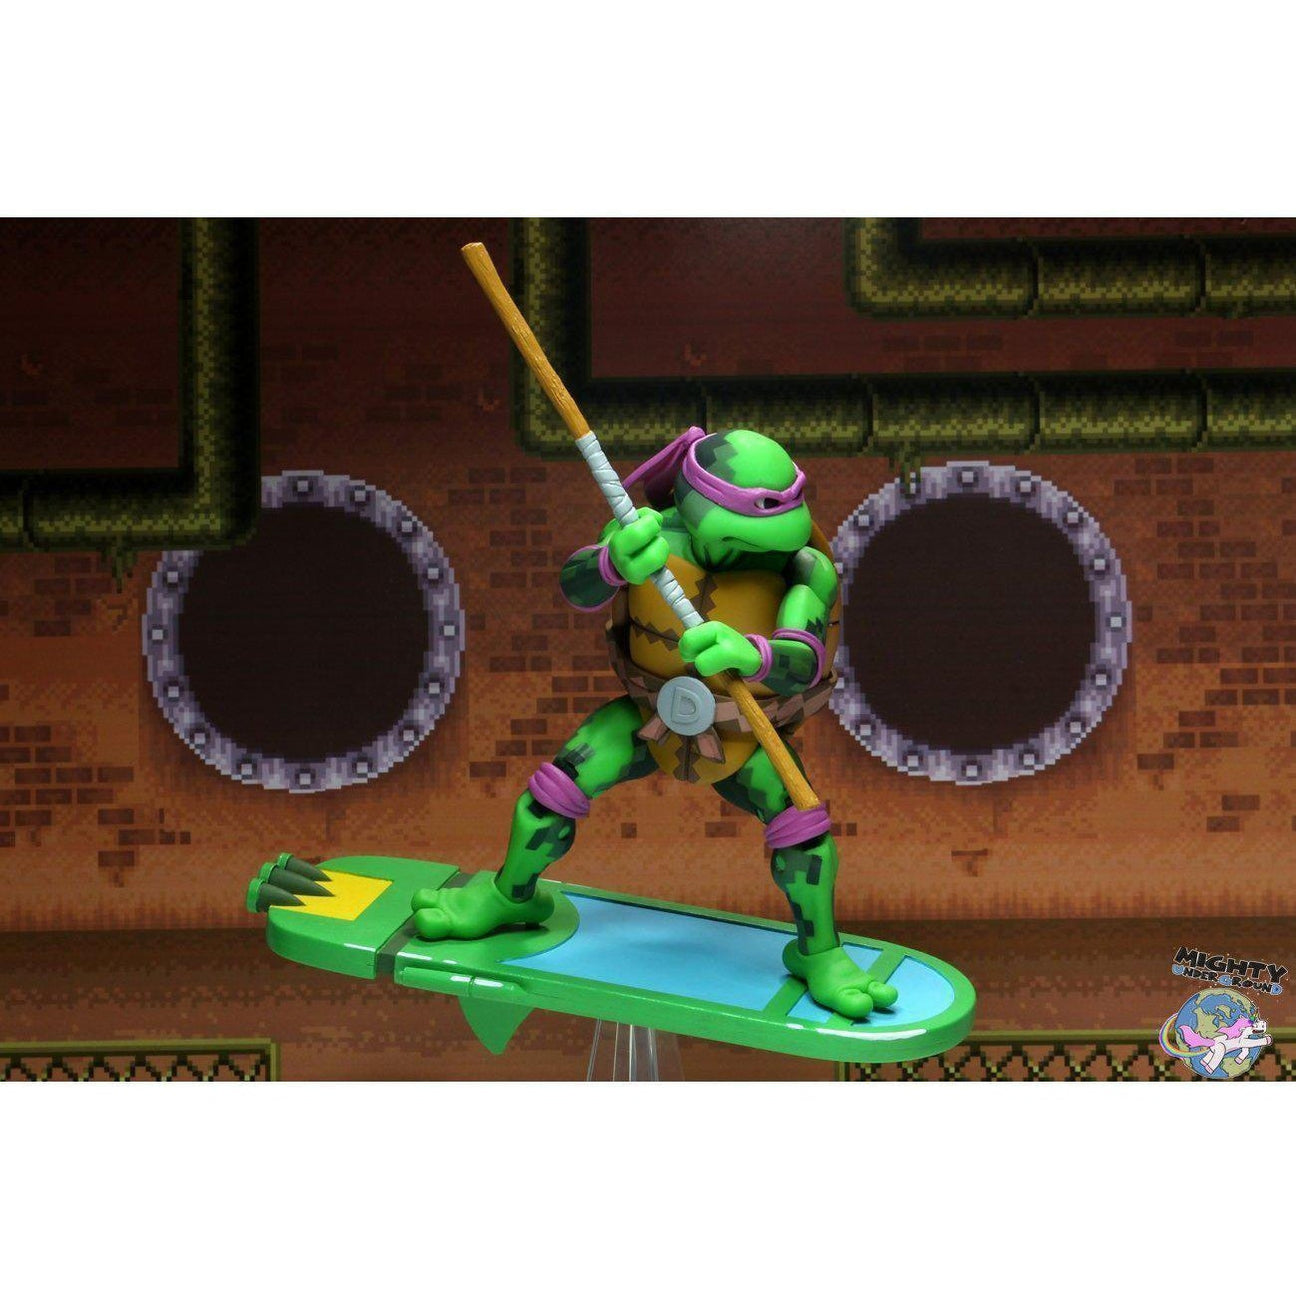 TMNT Turtles in Time (Game): Donatello-Actionfiguren-NECA-mighty-underground